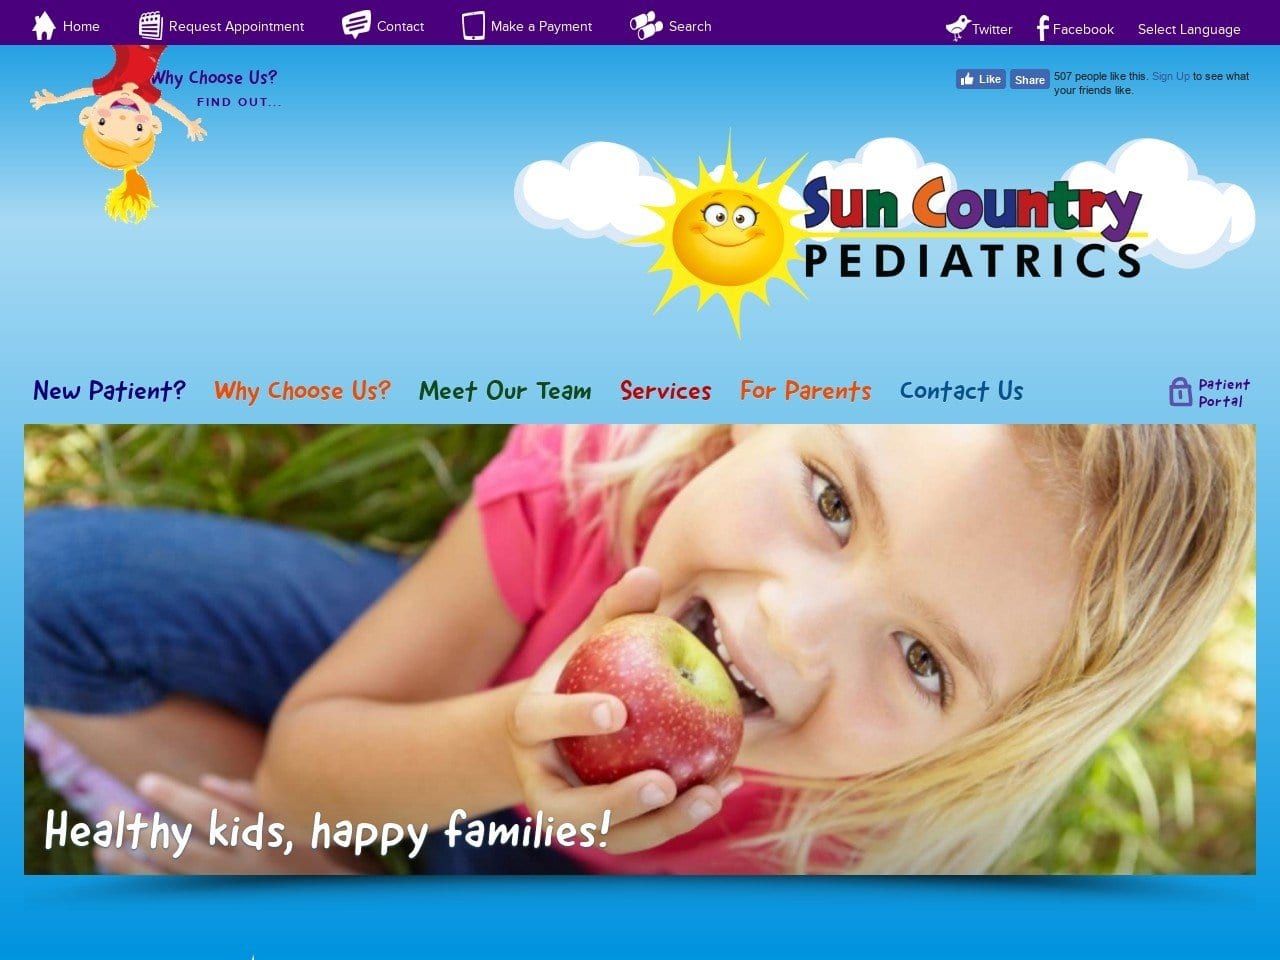 Sun Country Pediatrics Website Screenshot from suncountrypediatrics.com